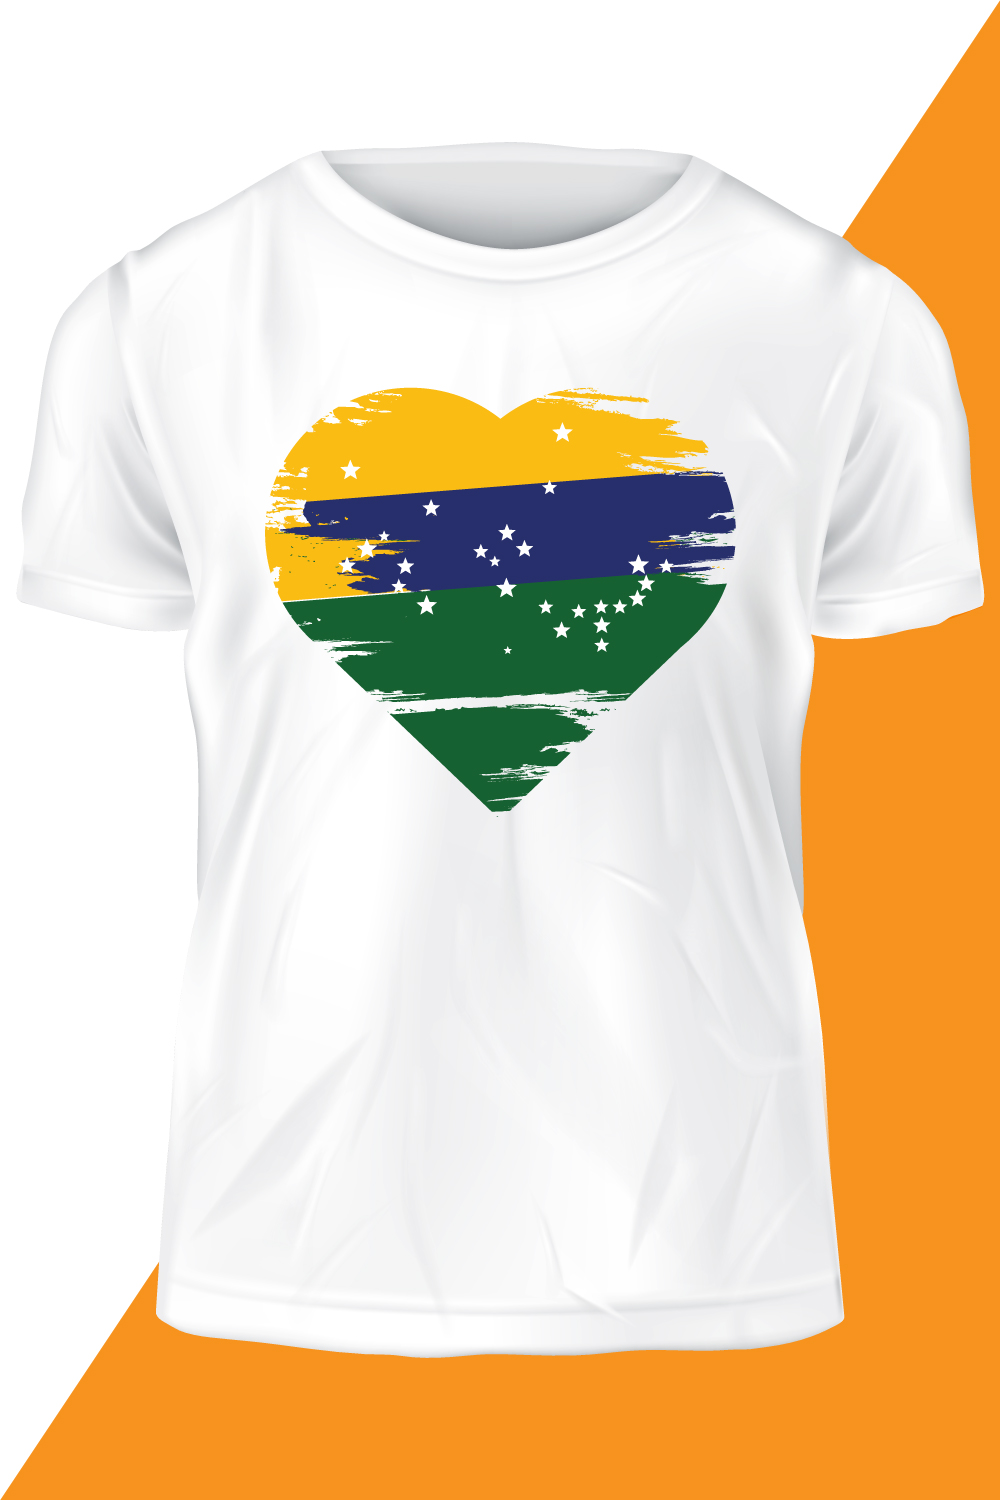 Heart Brazilian T-shirt Design pinterest image.